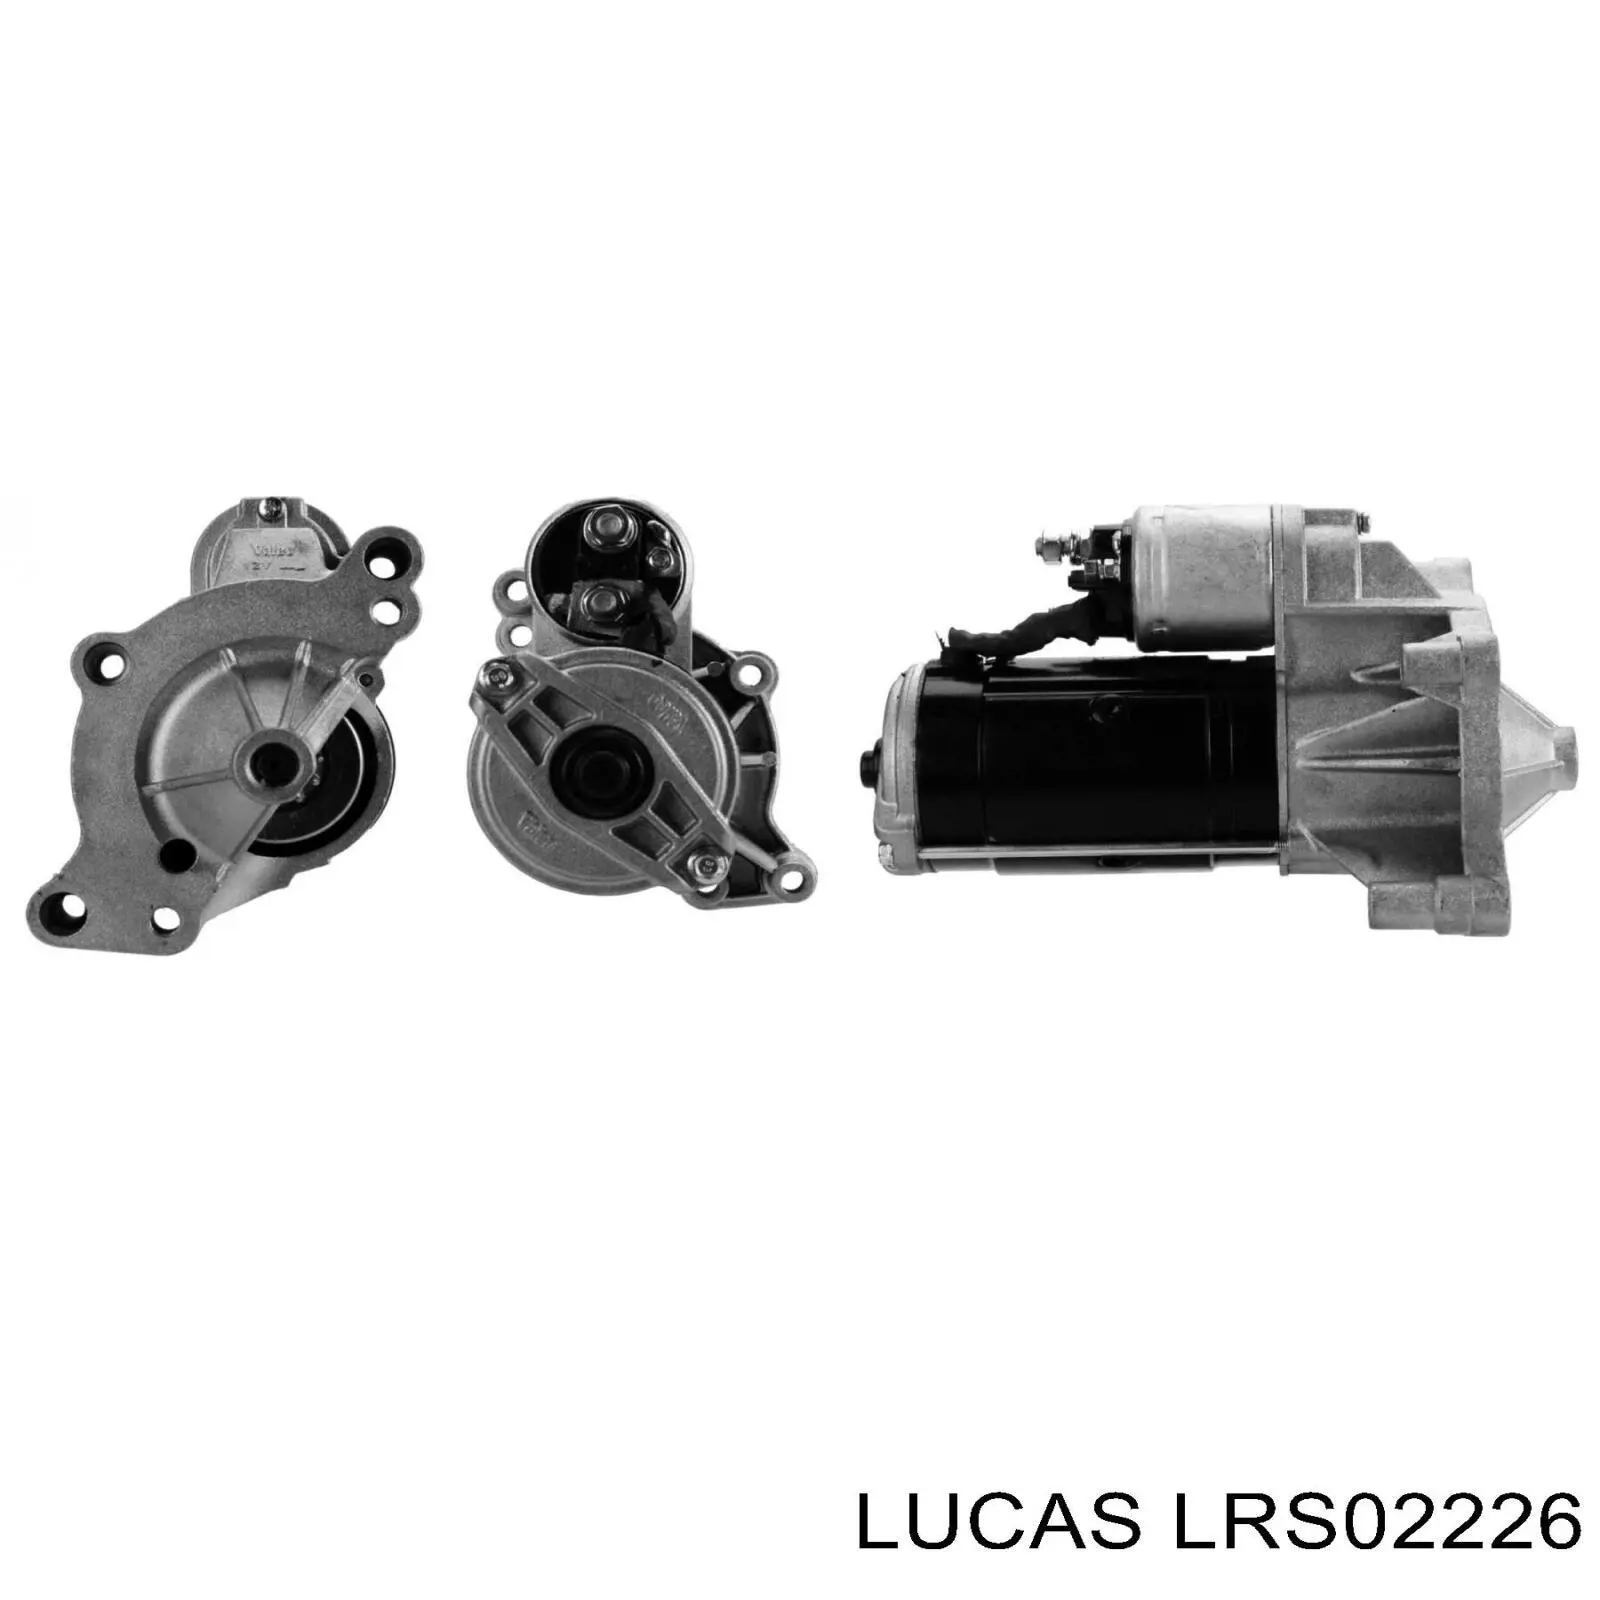 LRS02226 Lucas motor de arranque